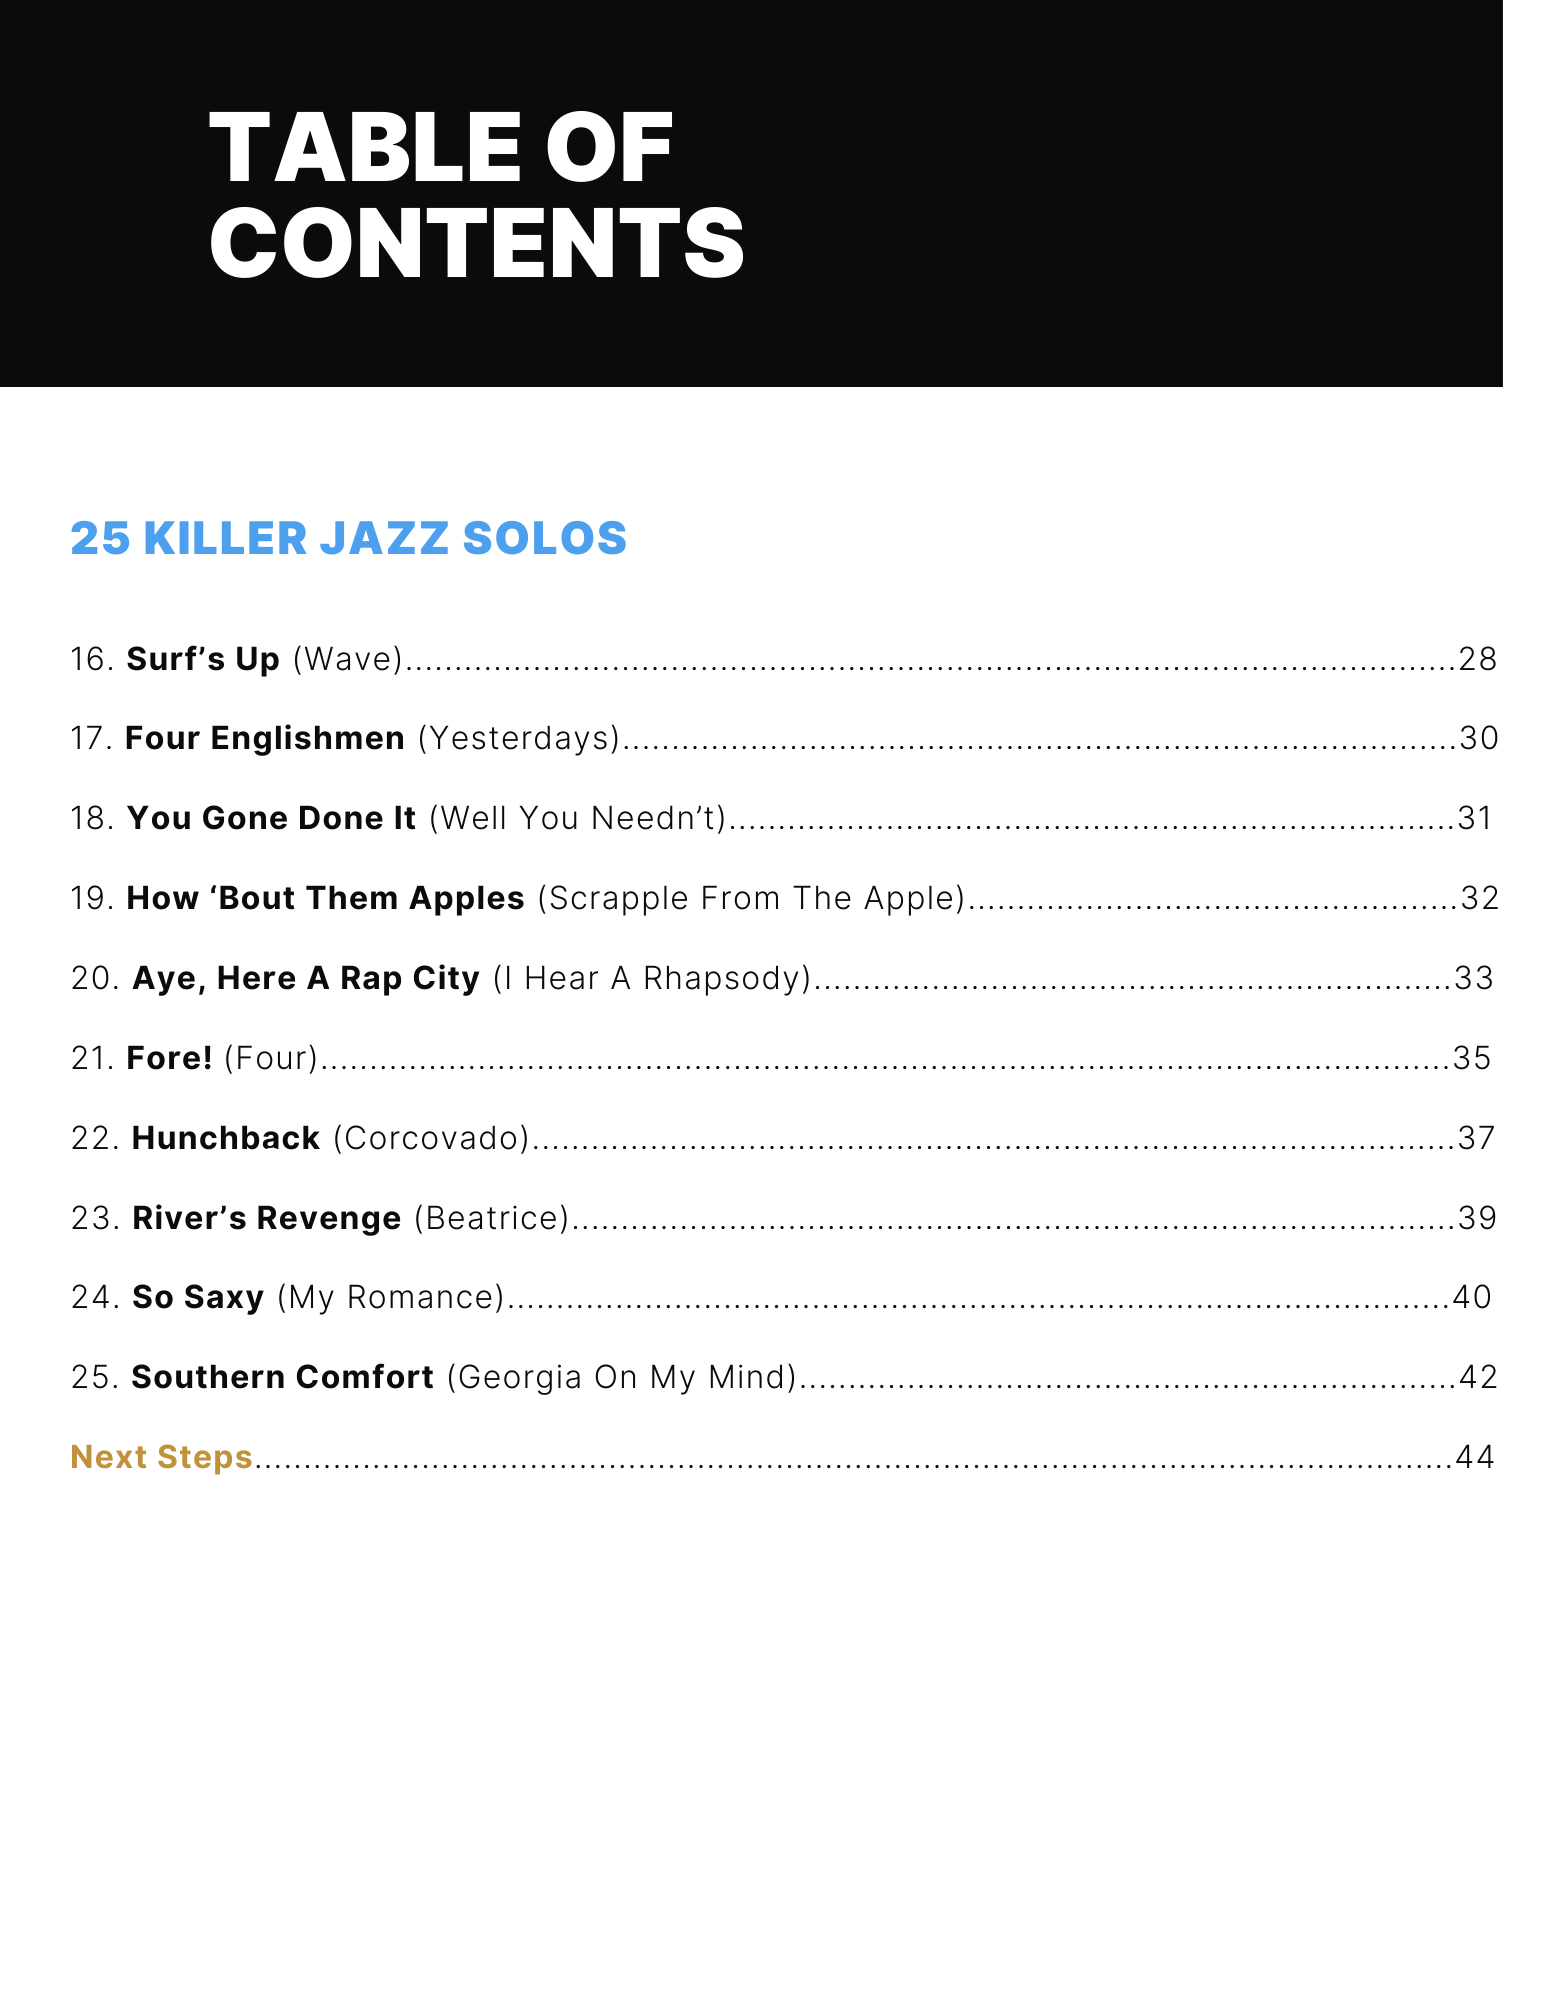 25 Killer Jazz Solos Contents